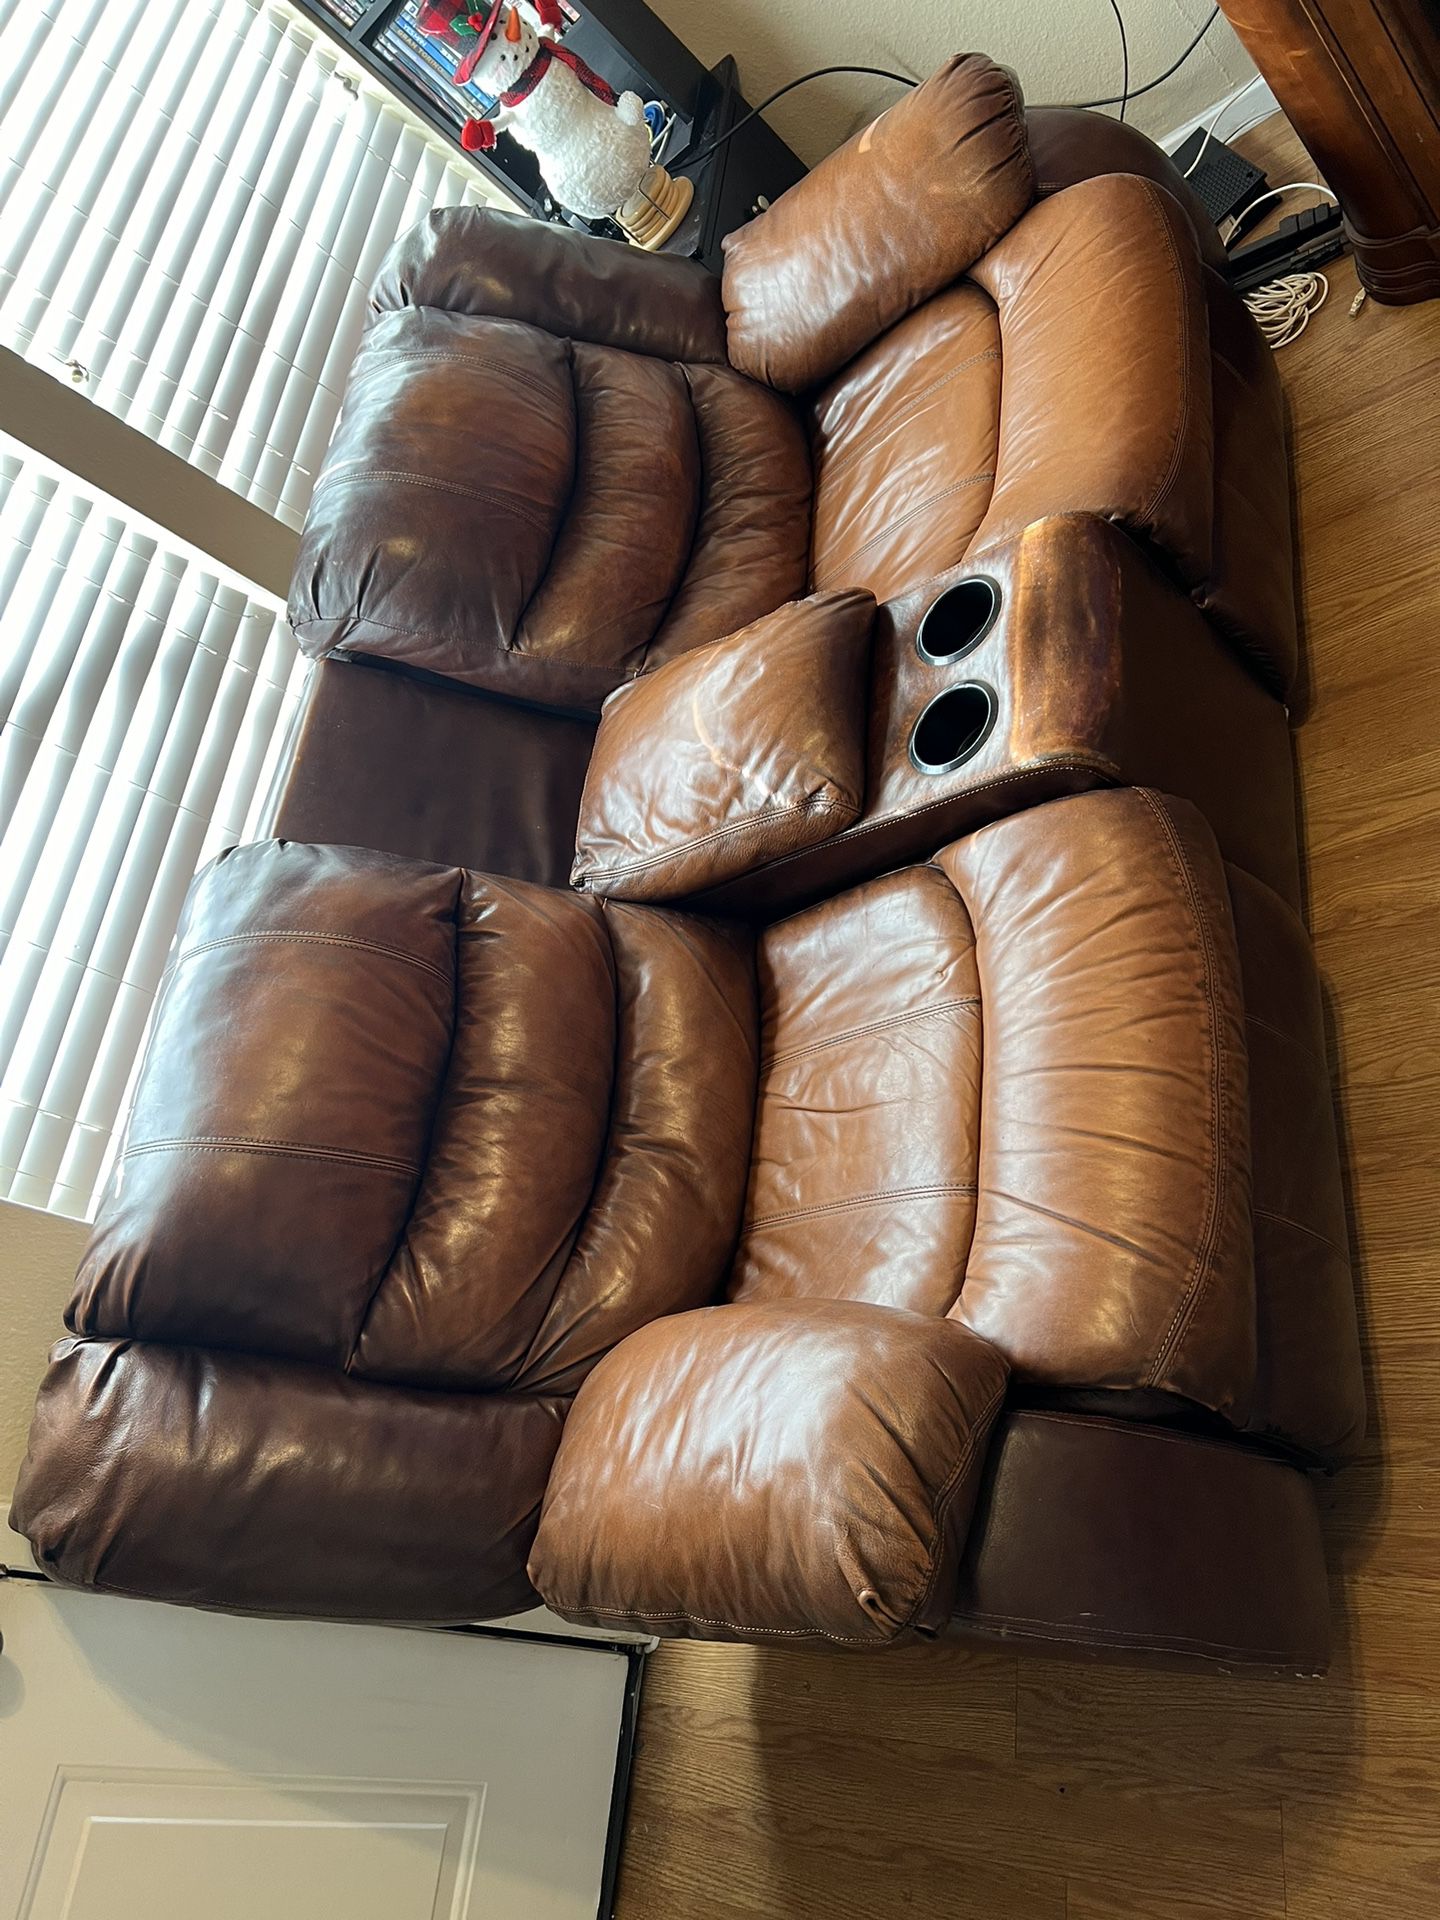 Reclining Leather Sofa